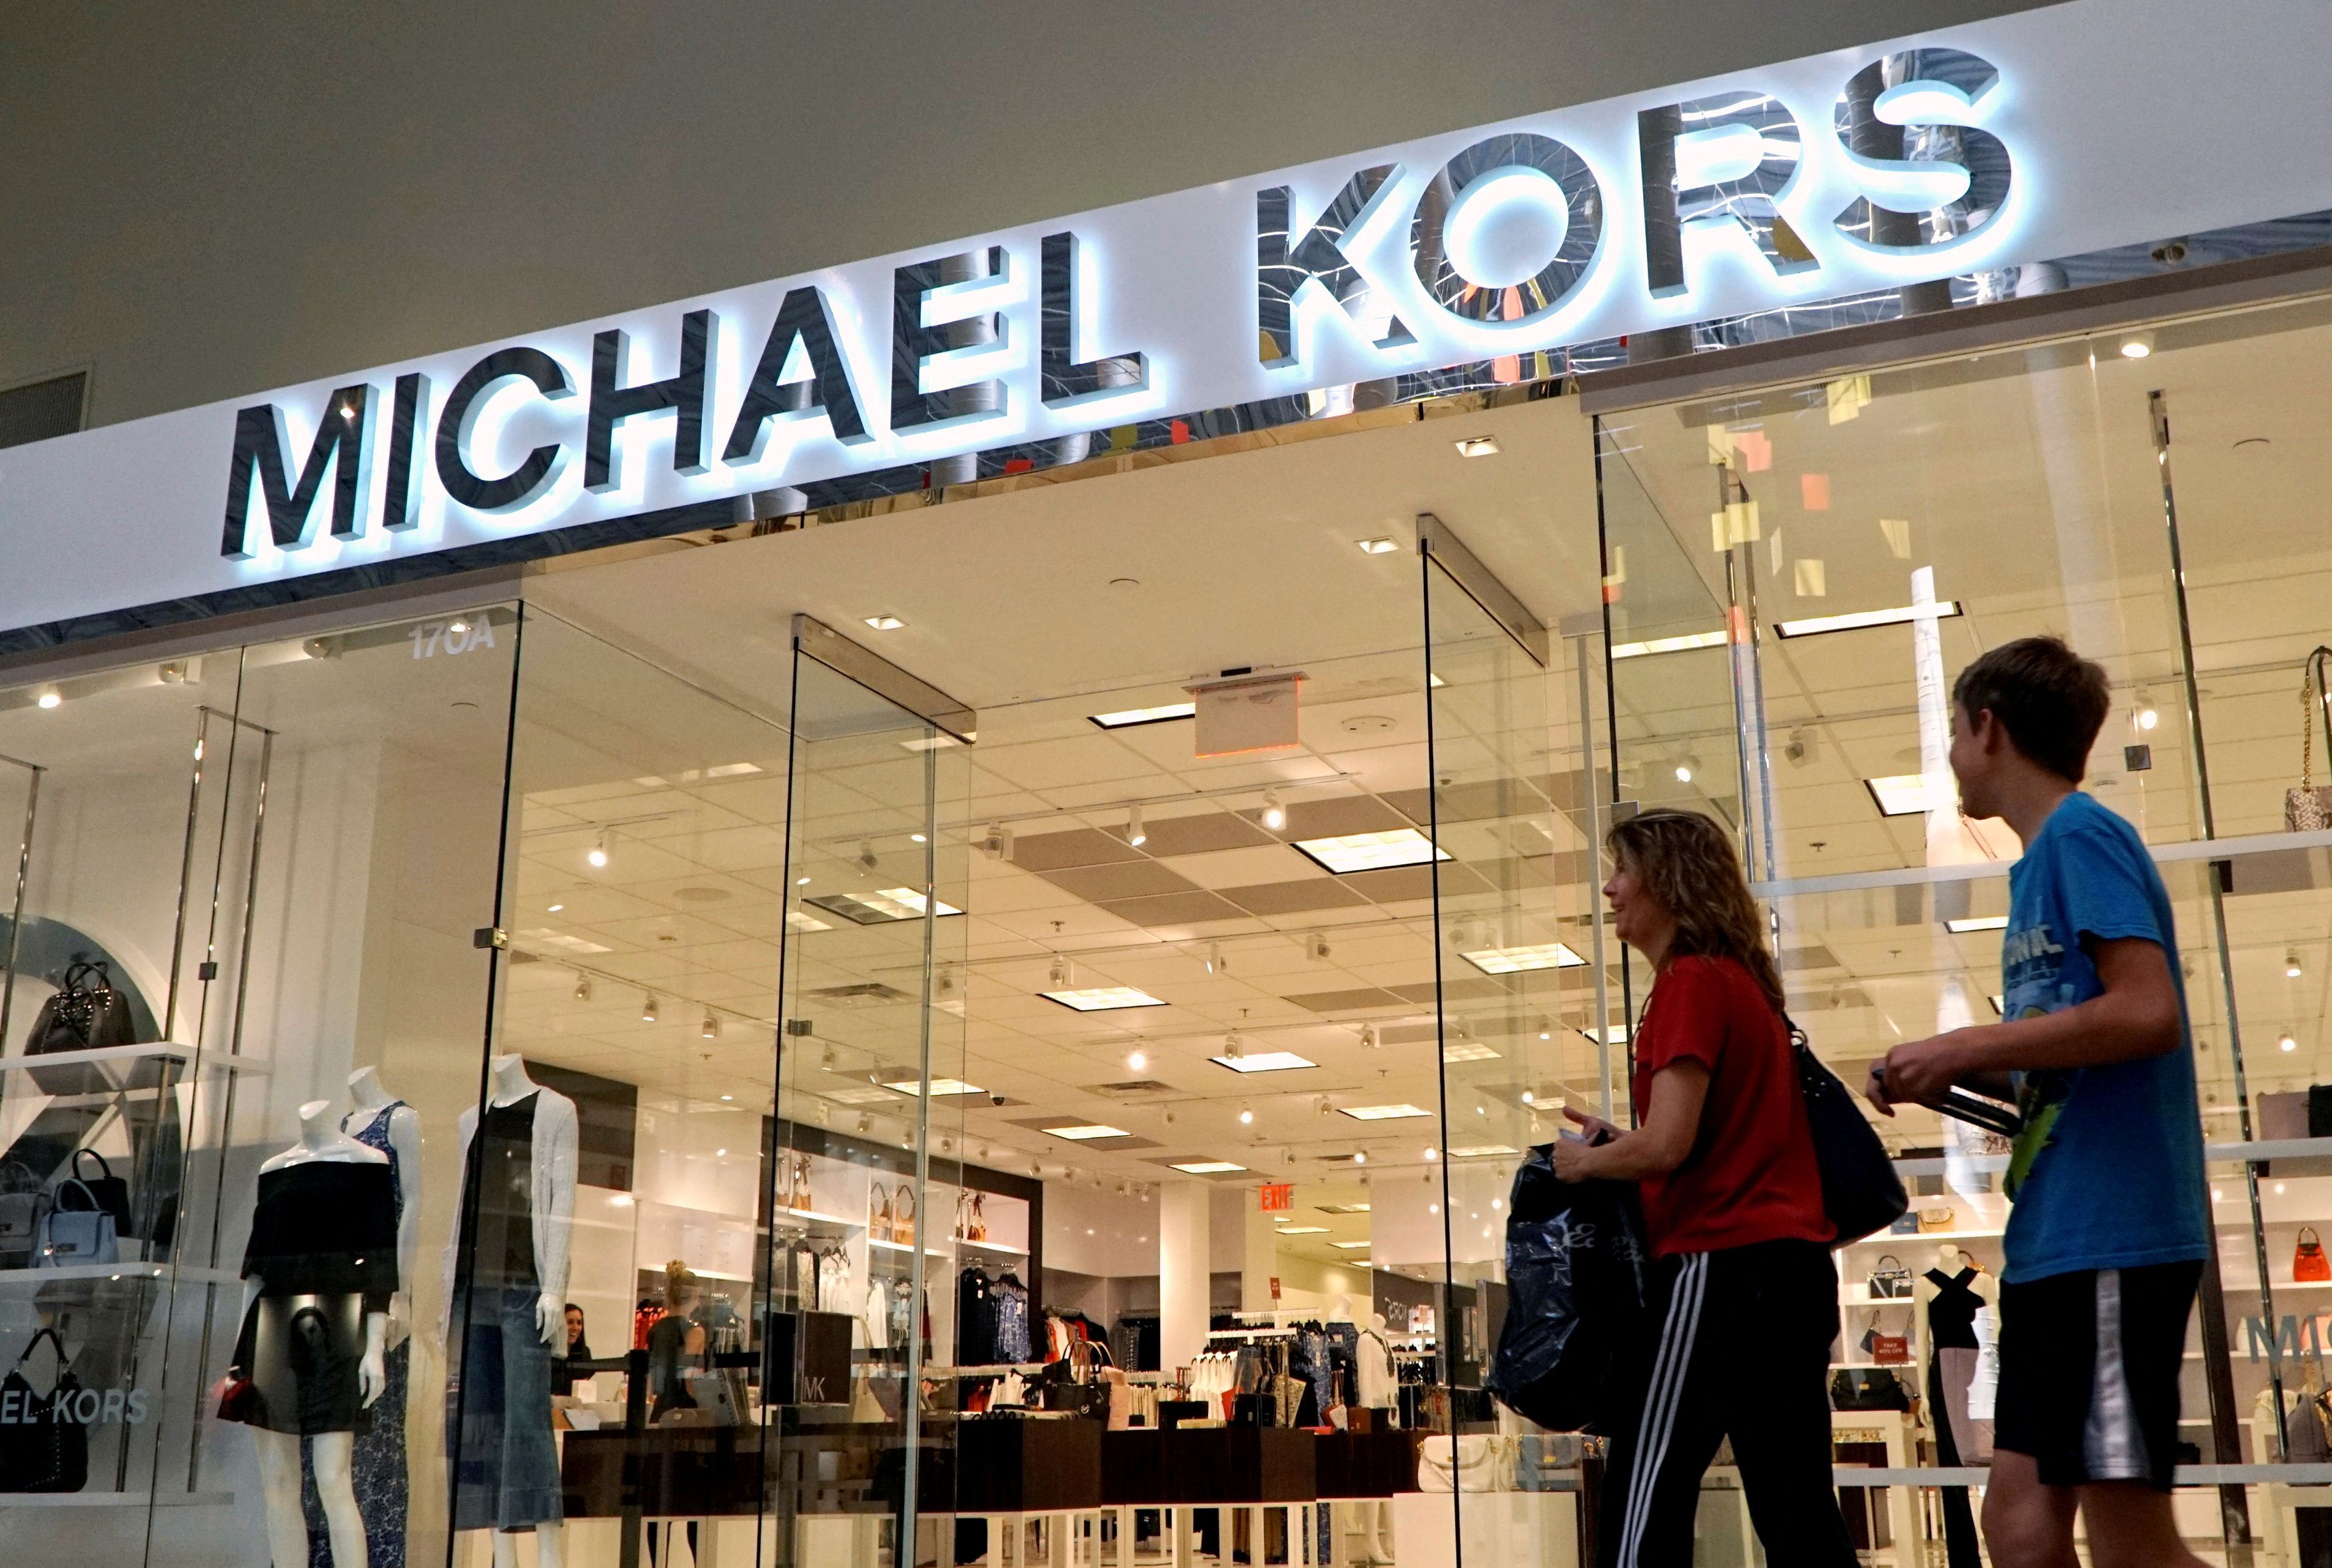 Versace, Michael Kors parent company shares soar on earnings beat